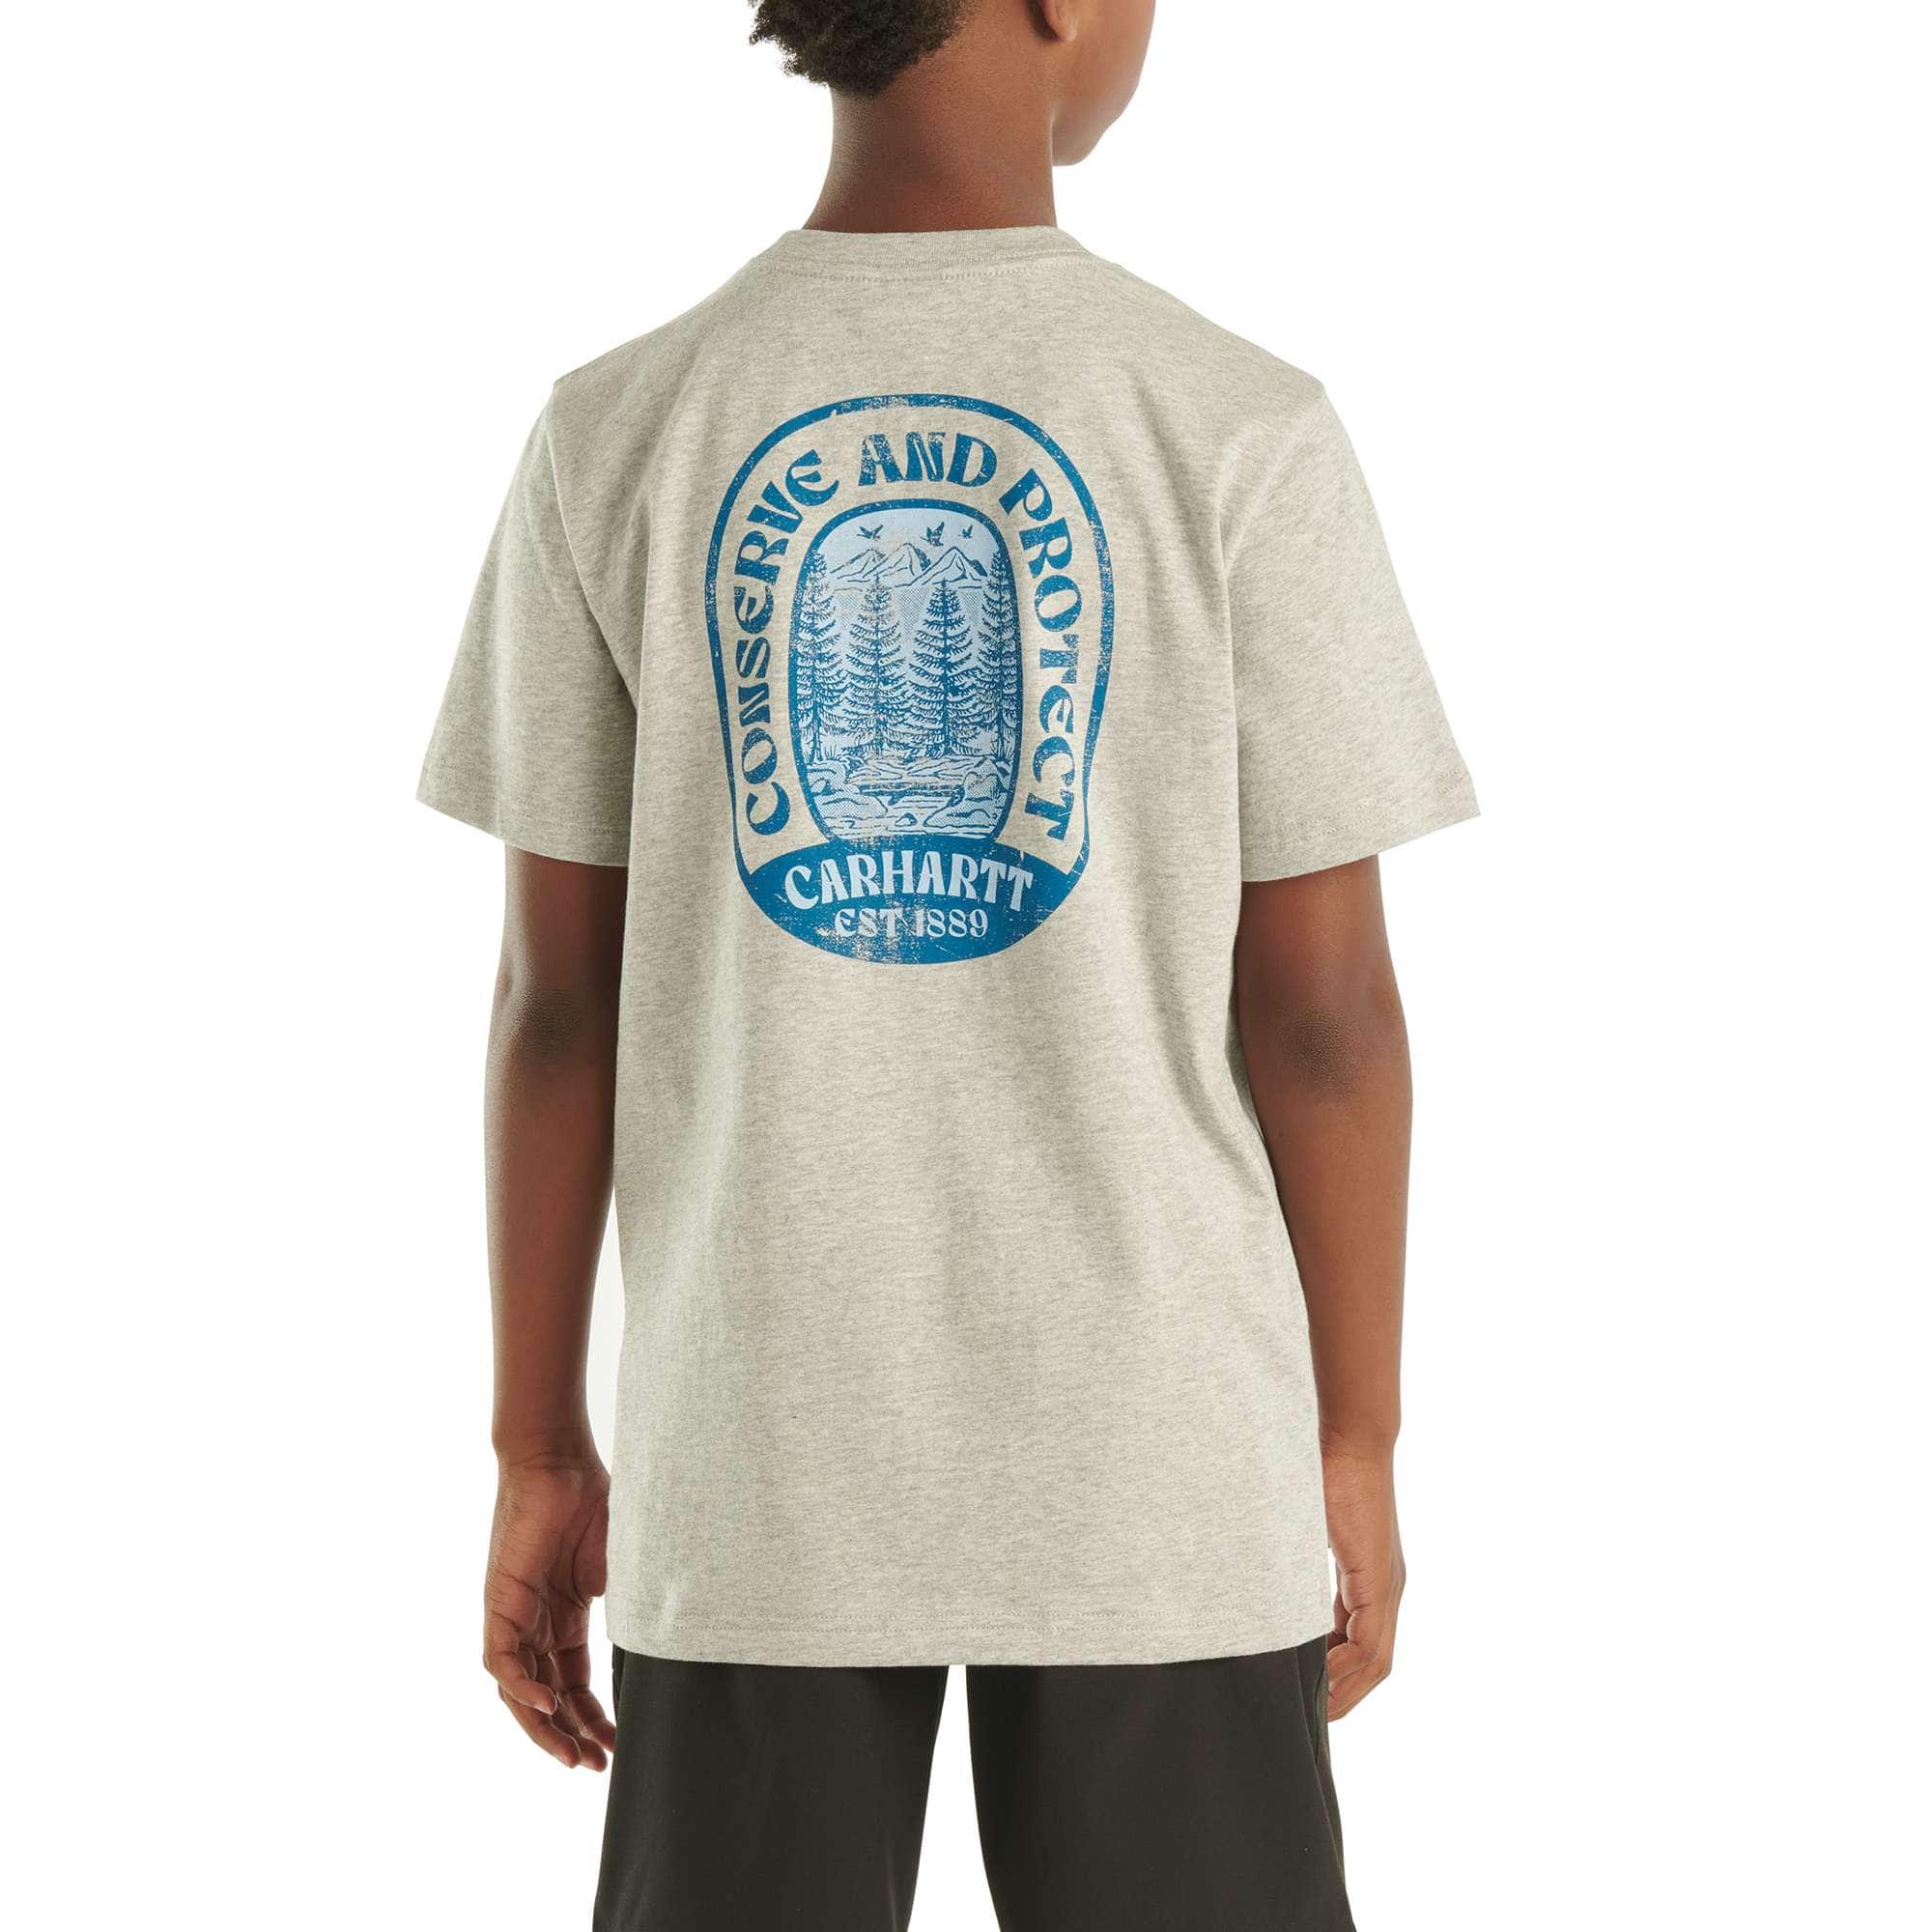 Boys' Short-Sleeve Graphic T-Shirt (Child/Youth)